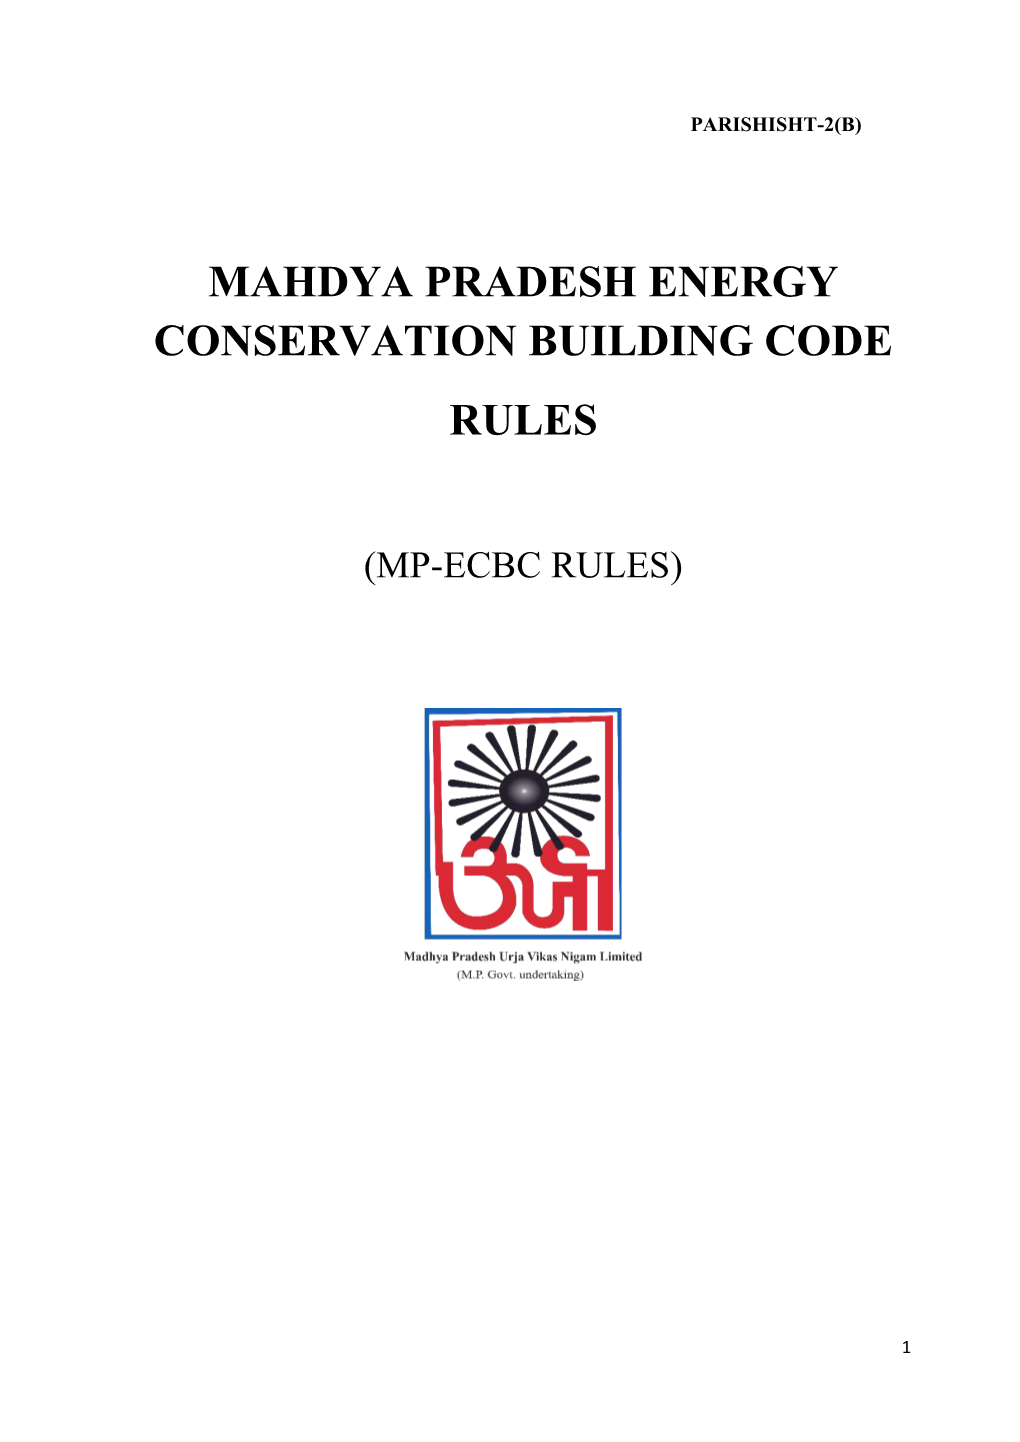 Mahdya Pradesh Energy Conservation Building Code Rules